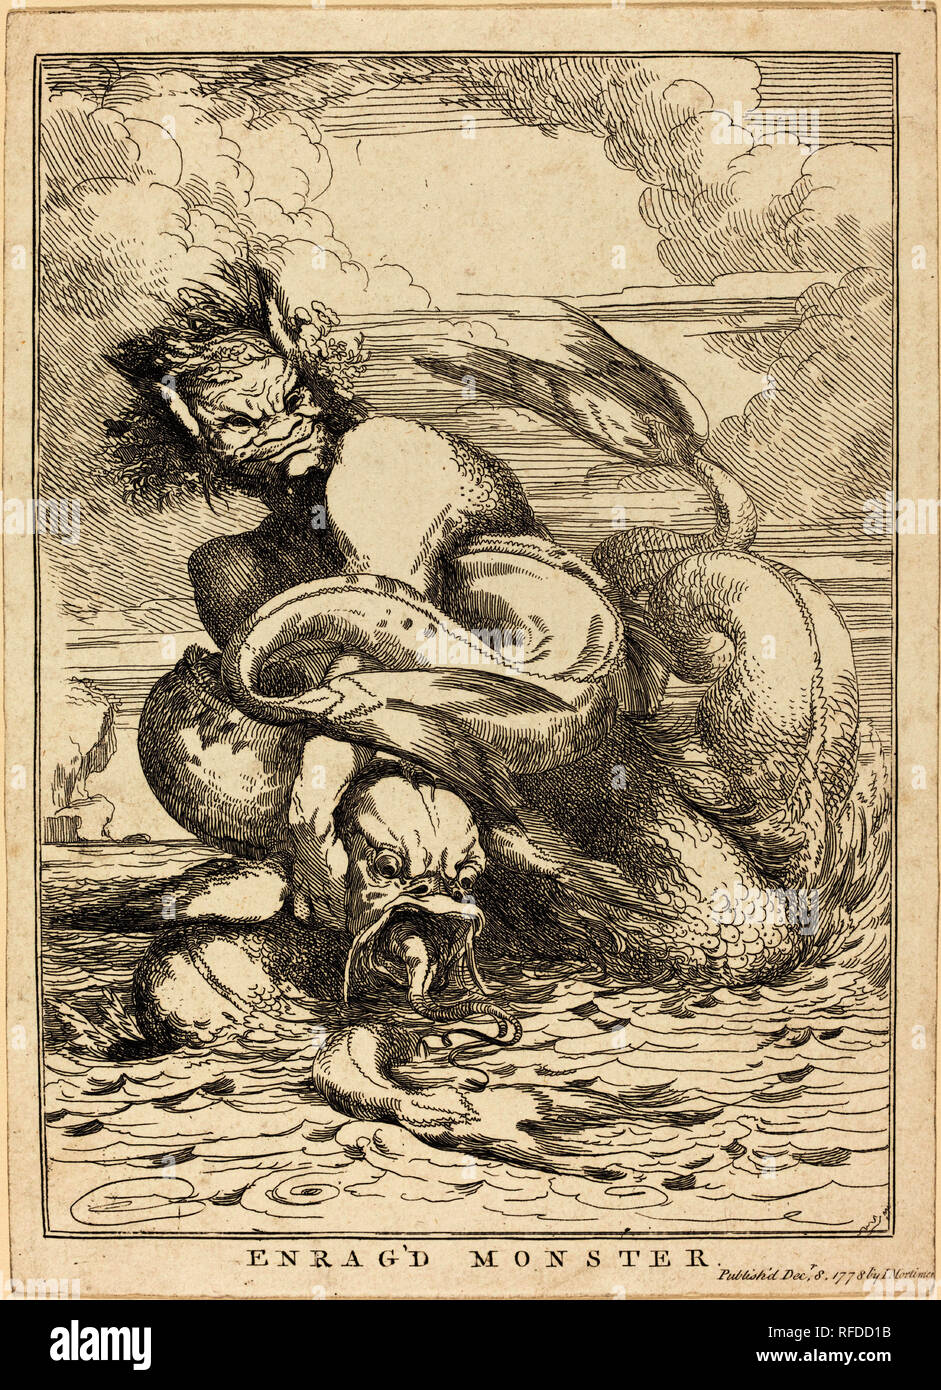 Enrag'd Monster. Dated: 1778. Medium: etching. Museum: National Gallery of Art, Washington DC. Author: John Hamilton Mortimer. Stock Photo